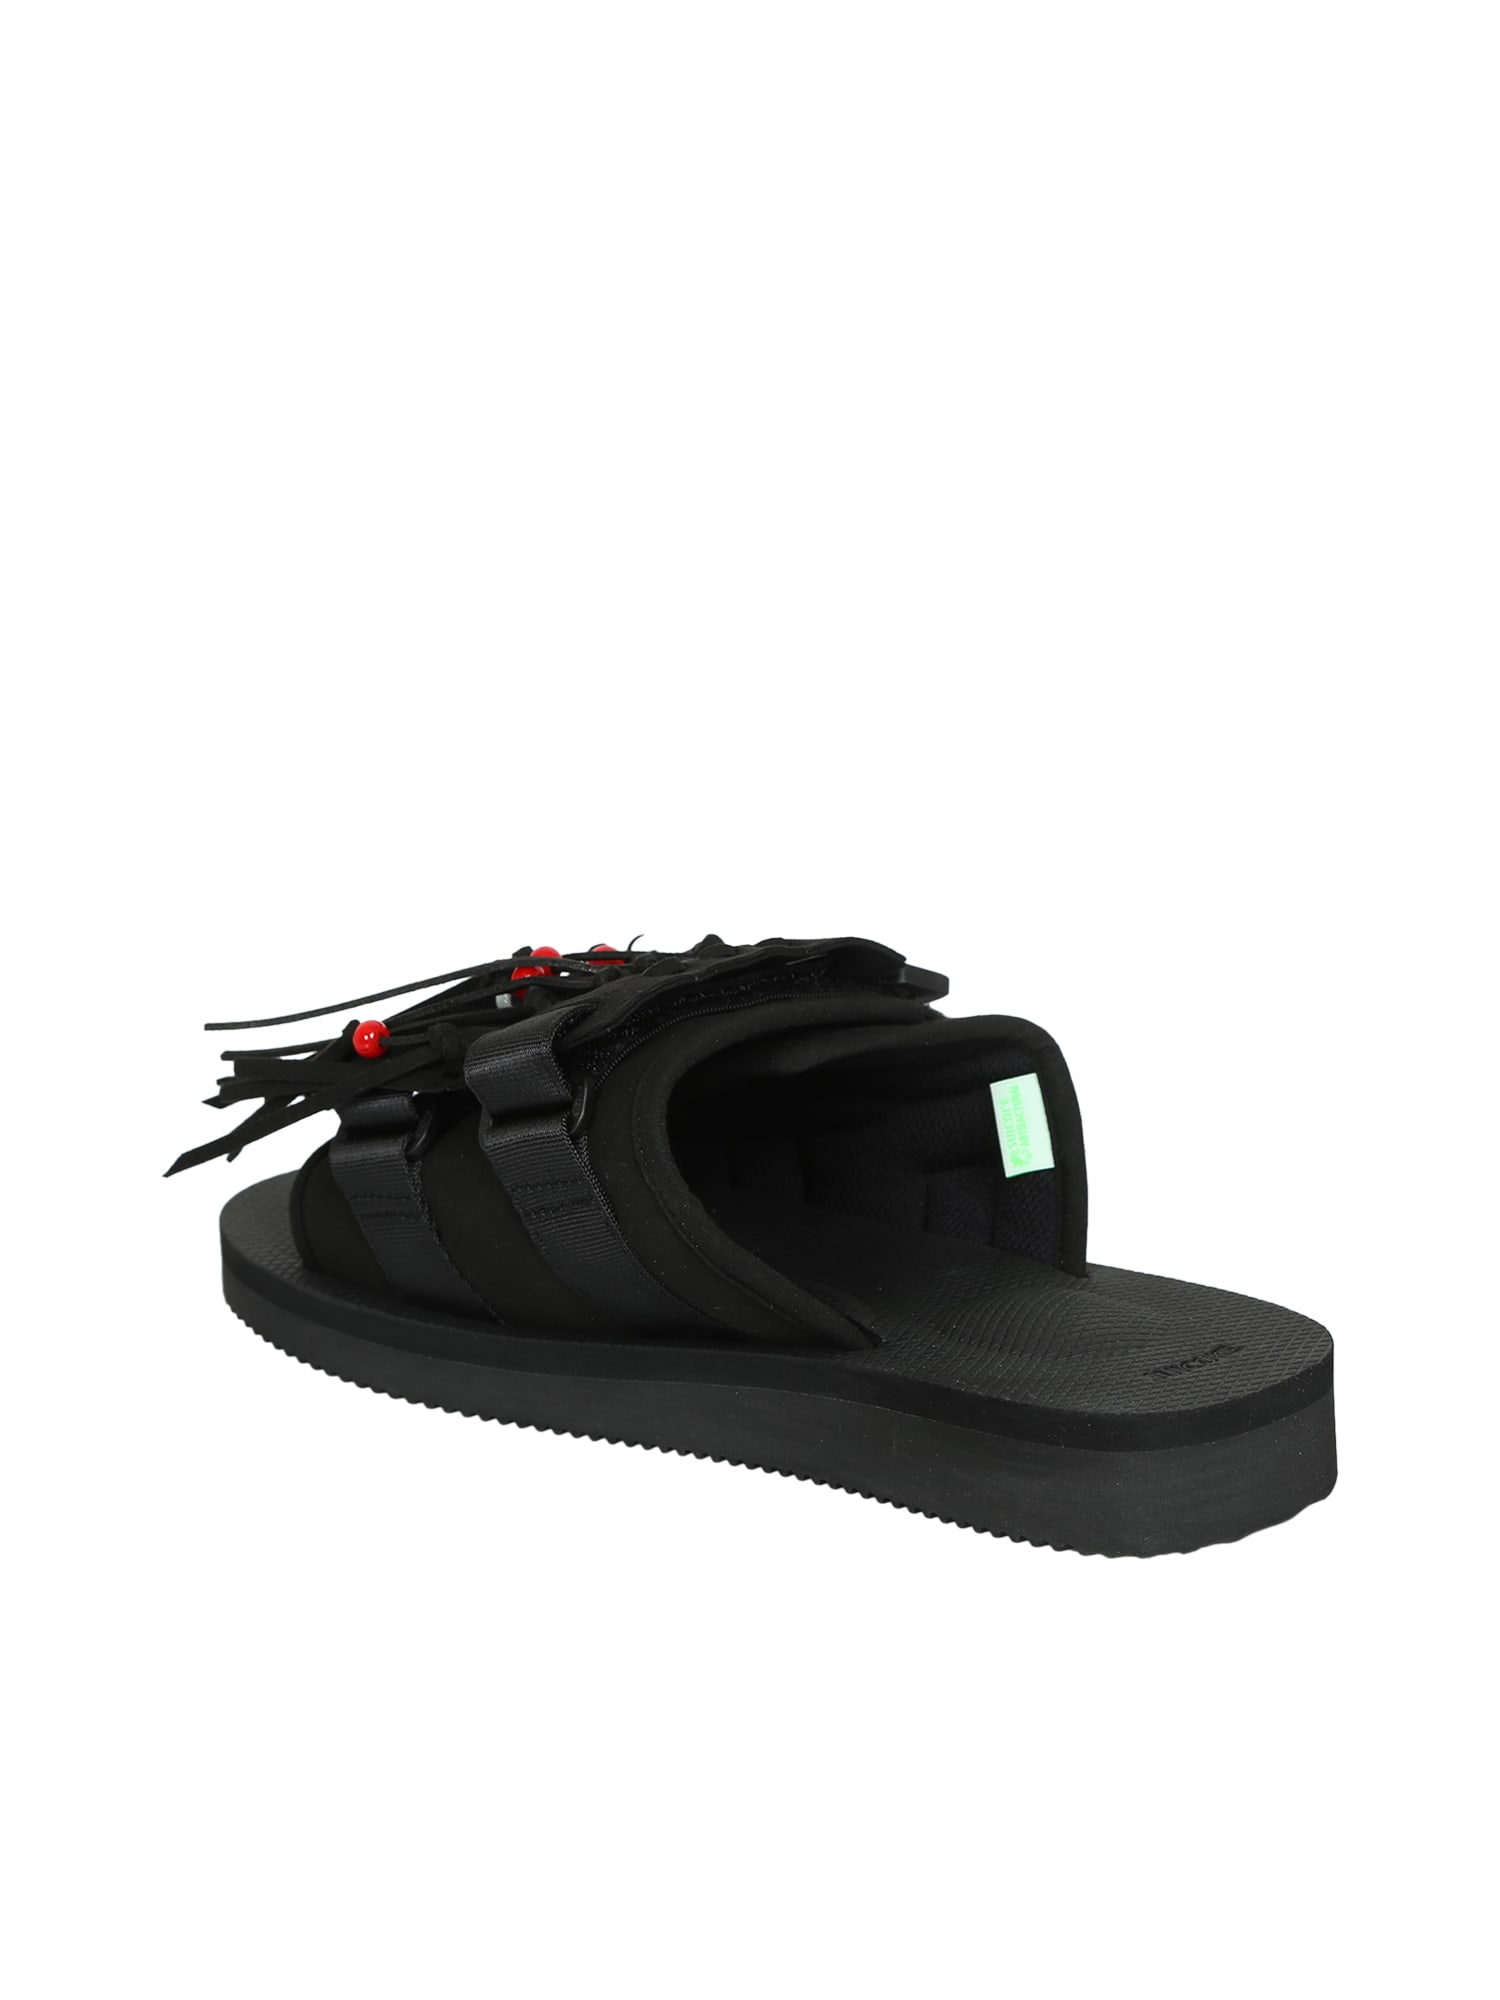 Shop Suicoke Hoto-cab Fringed Black Sandals